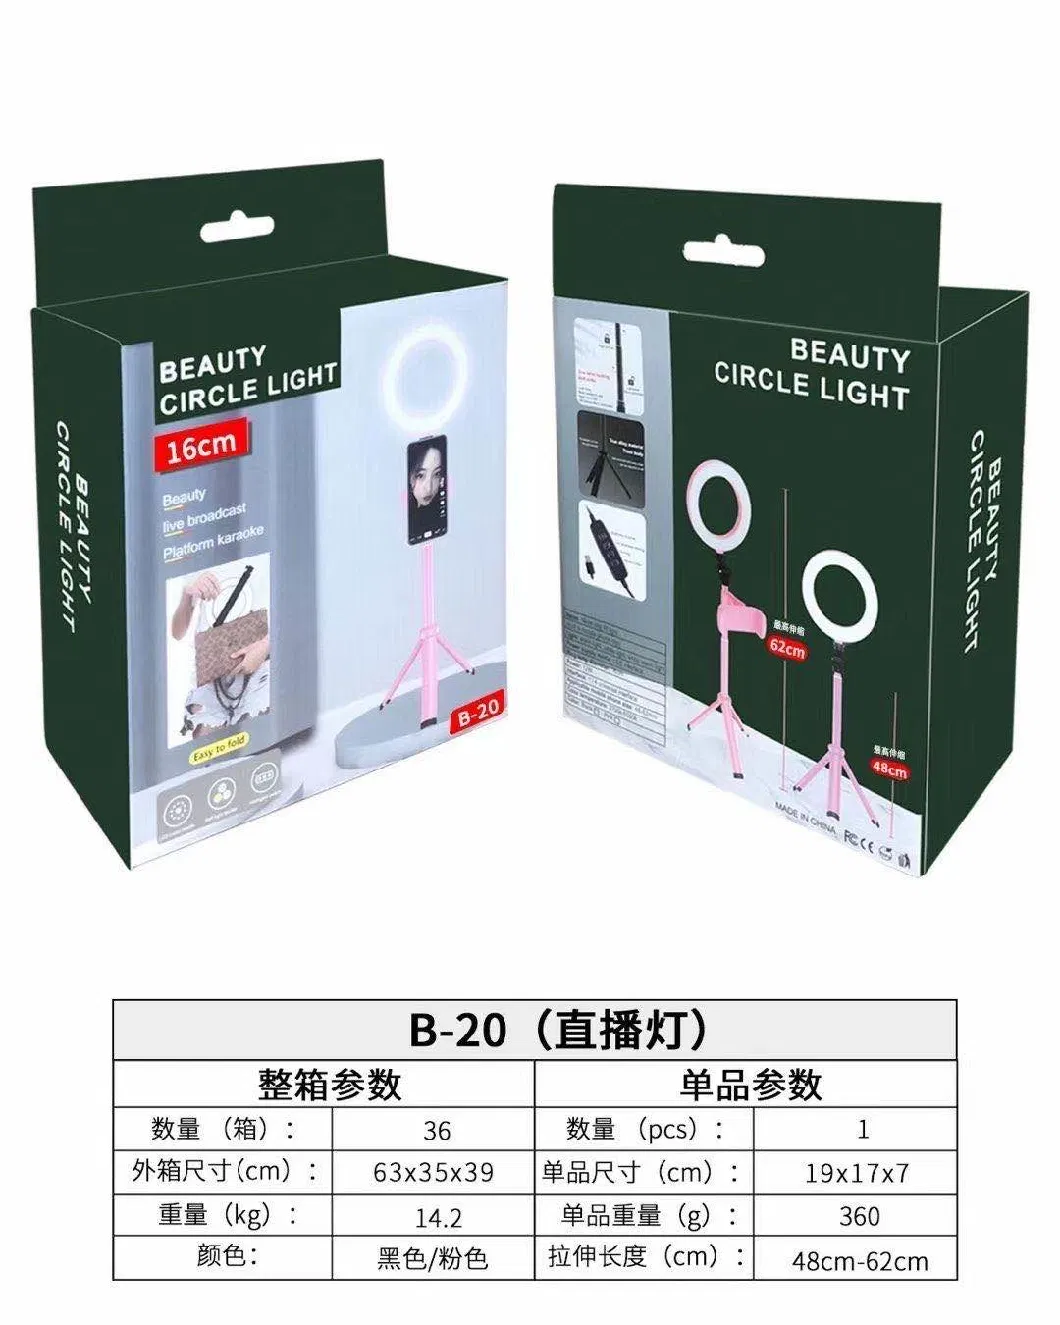 High Quality Low Price Cute Hot Sale Live Stream Beauty Make up Mode Light Selfie Stick Bracket Rack